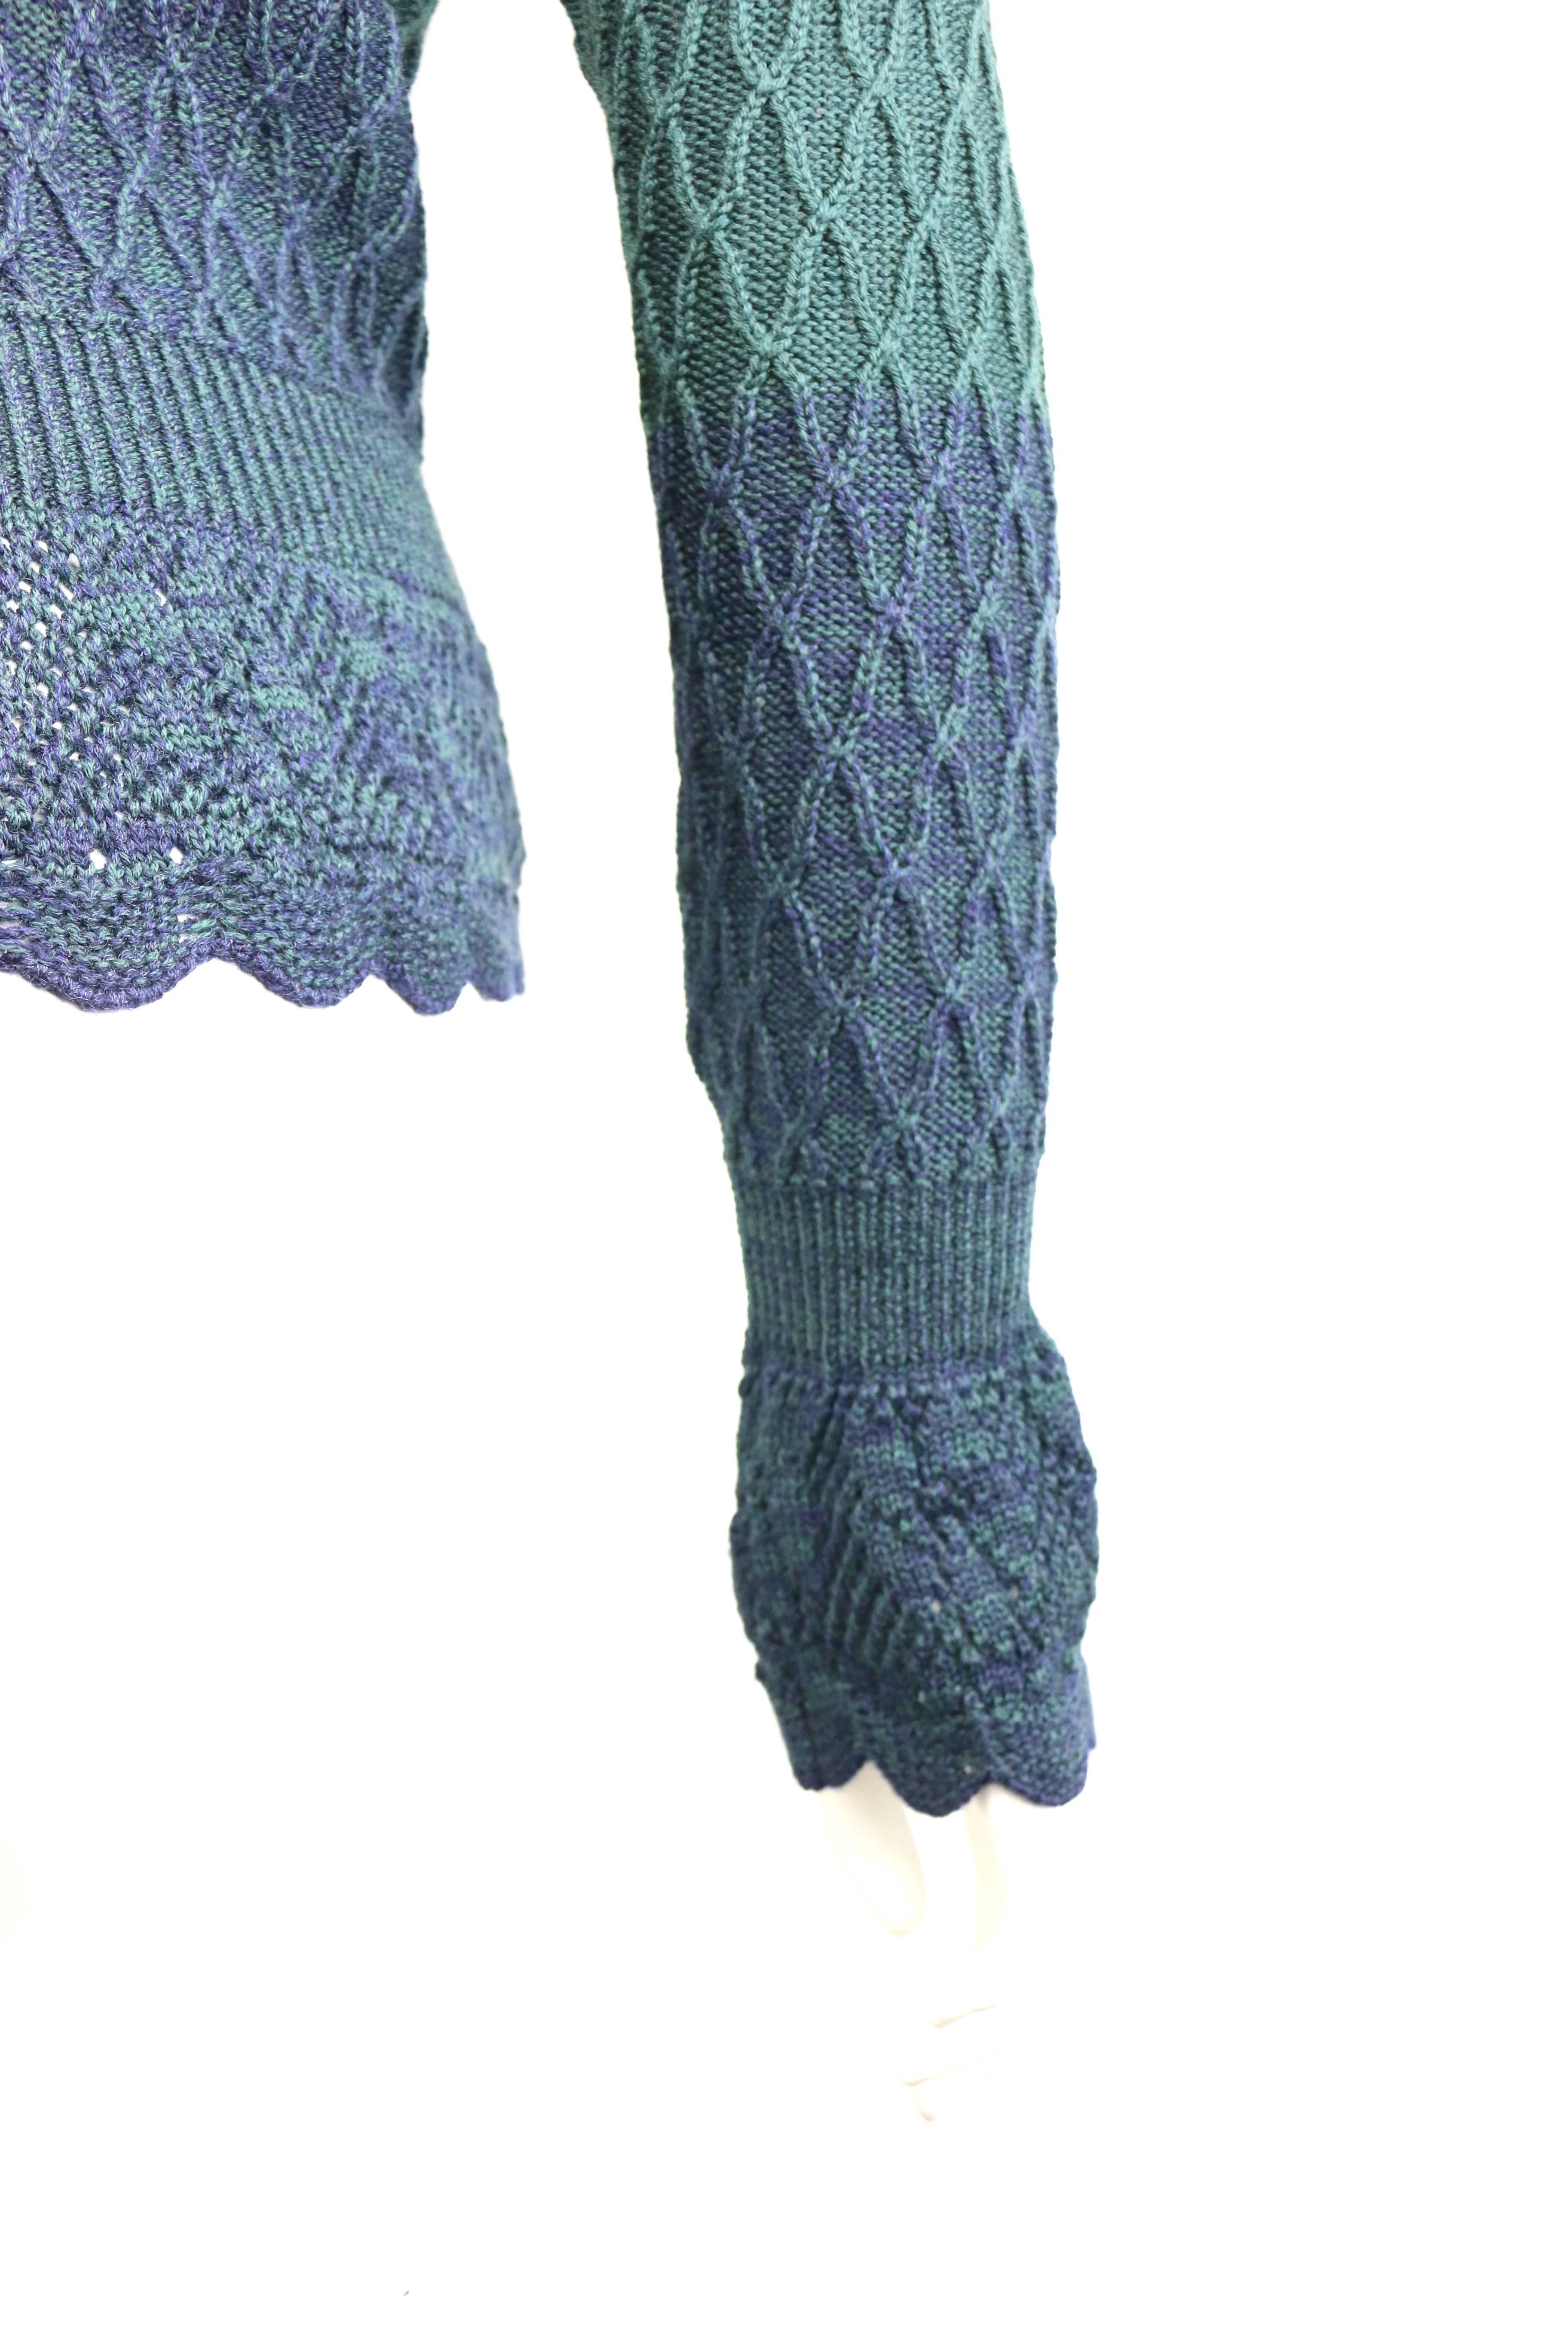 Christian Lacroix Purple/Green/Blue Knitted Pattern Wool Mock Neck Top 1